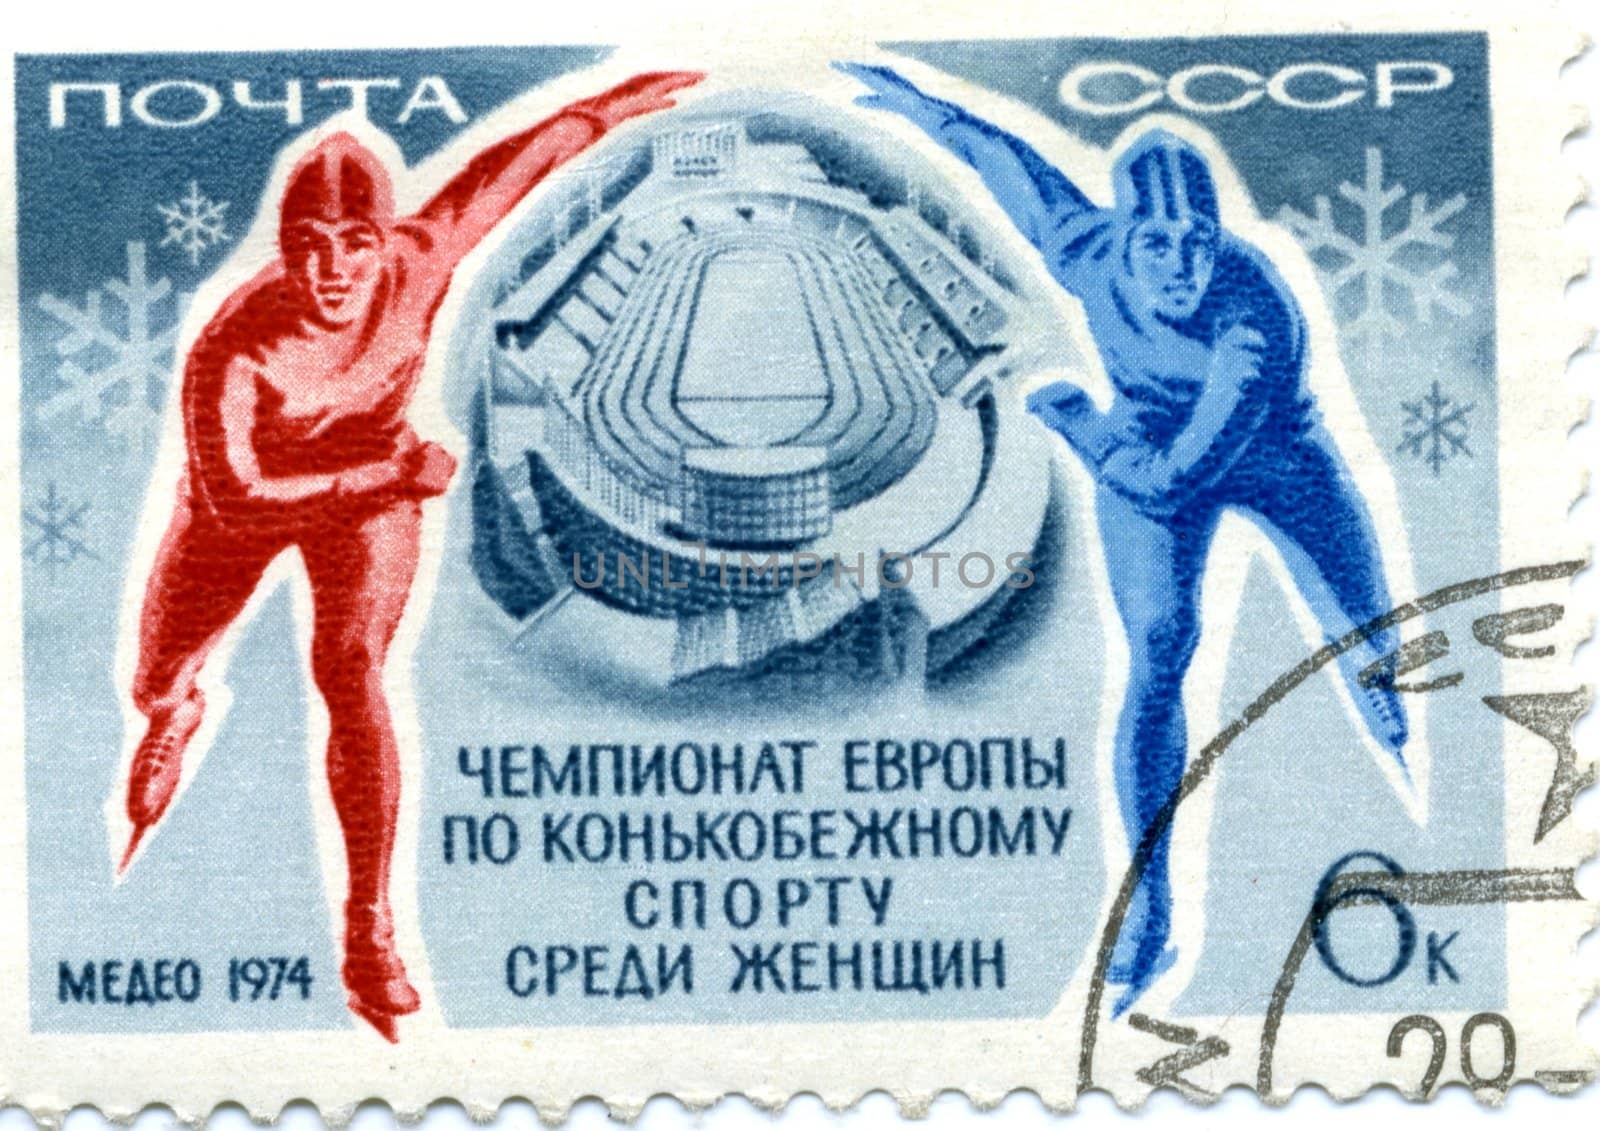 Ice skaring stamp by Vof